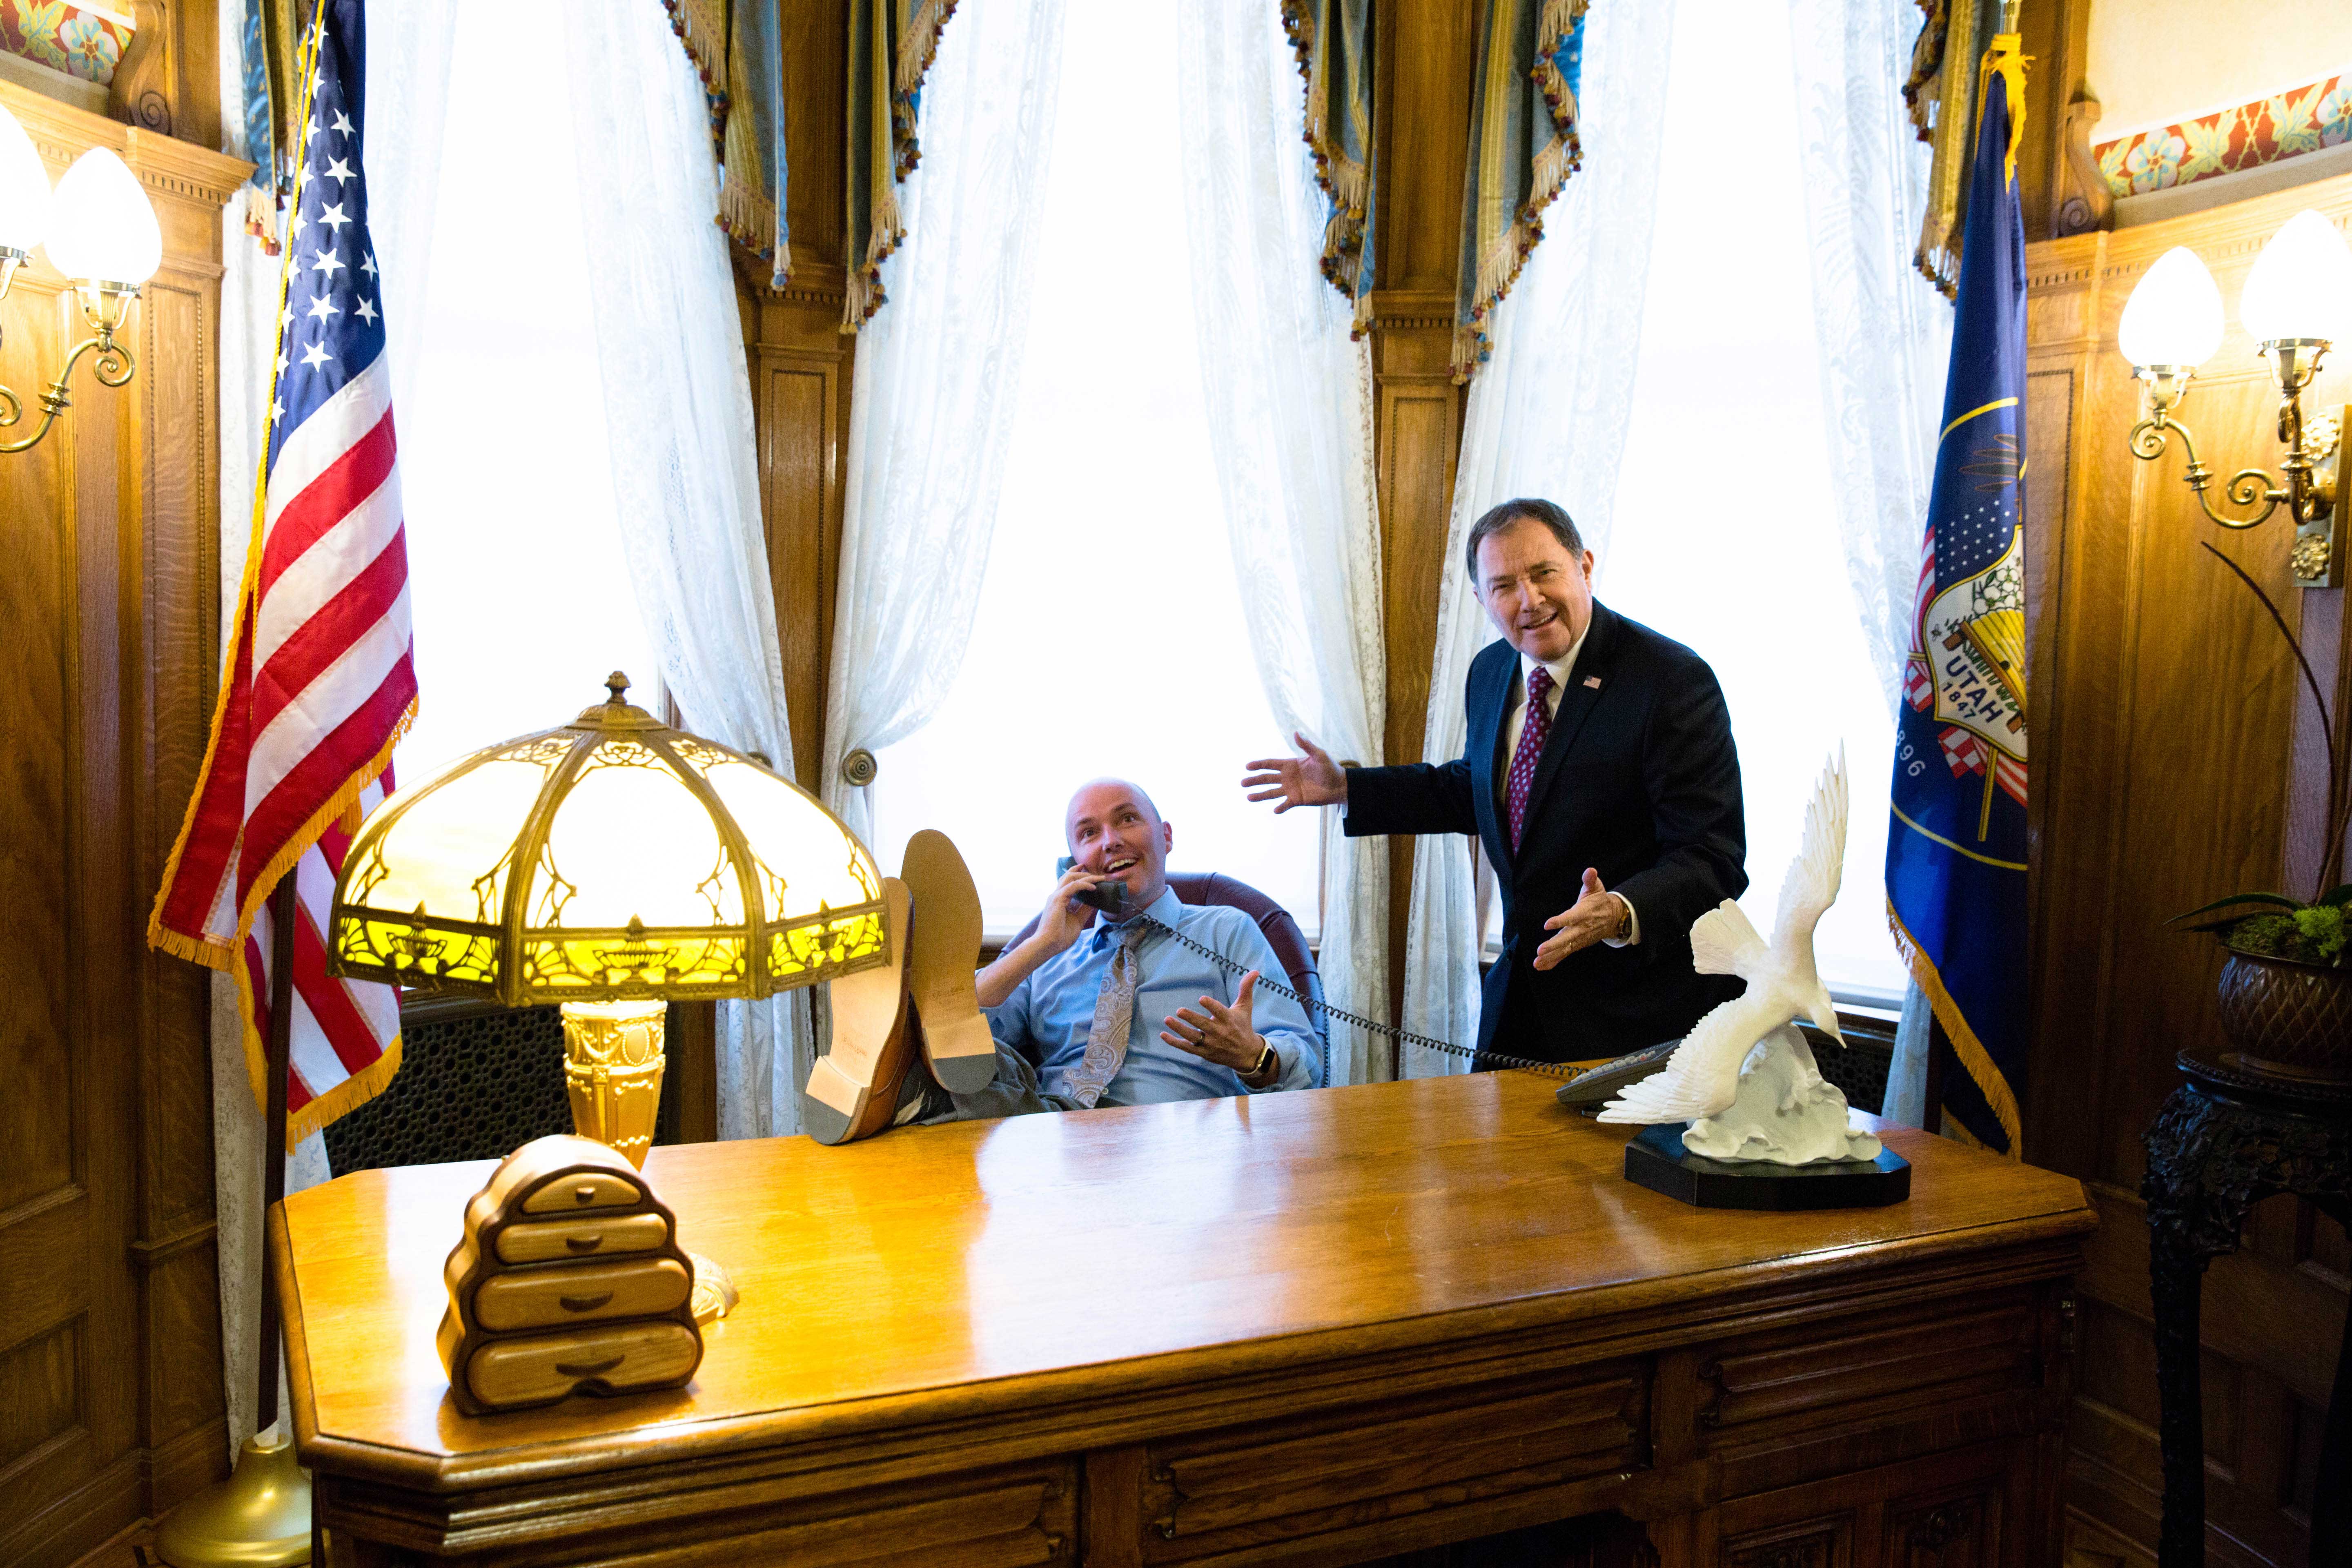 The Governor and the Lt. Governor at the Governors desk